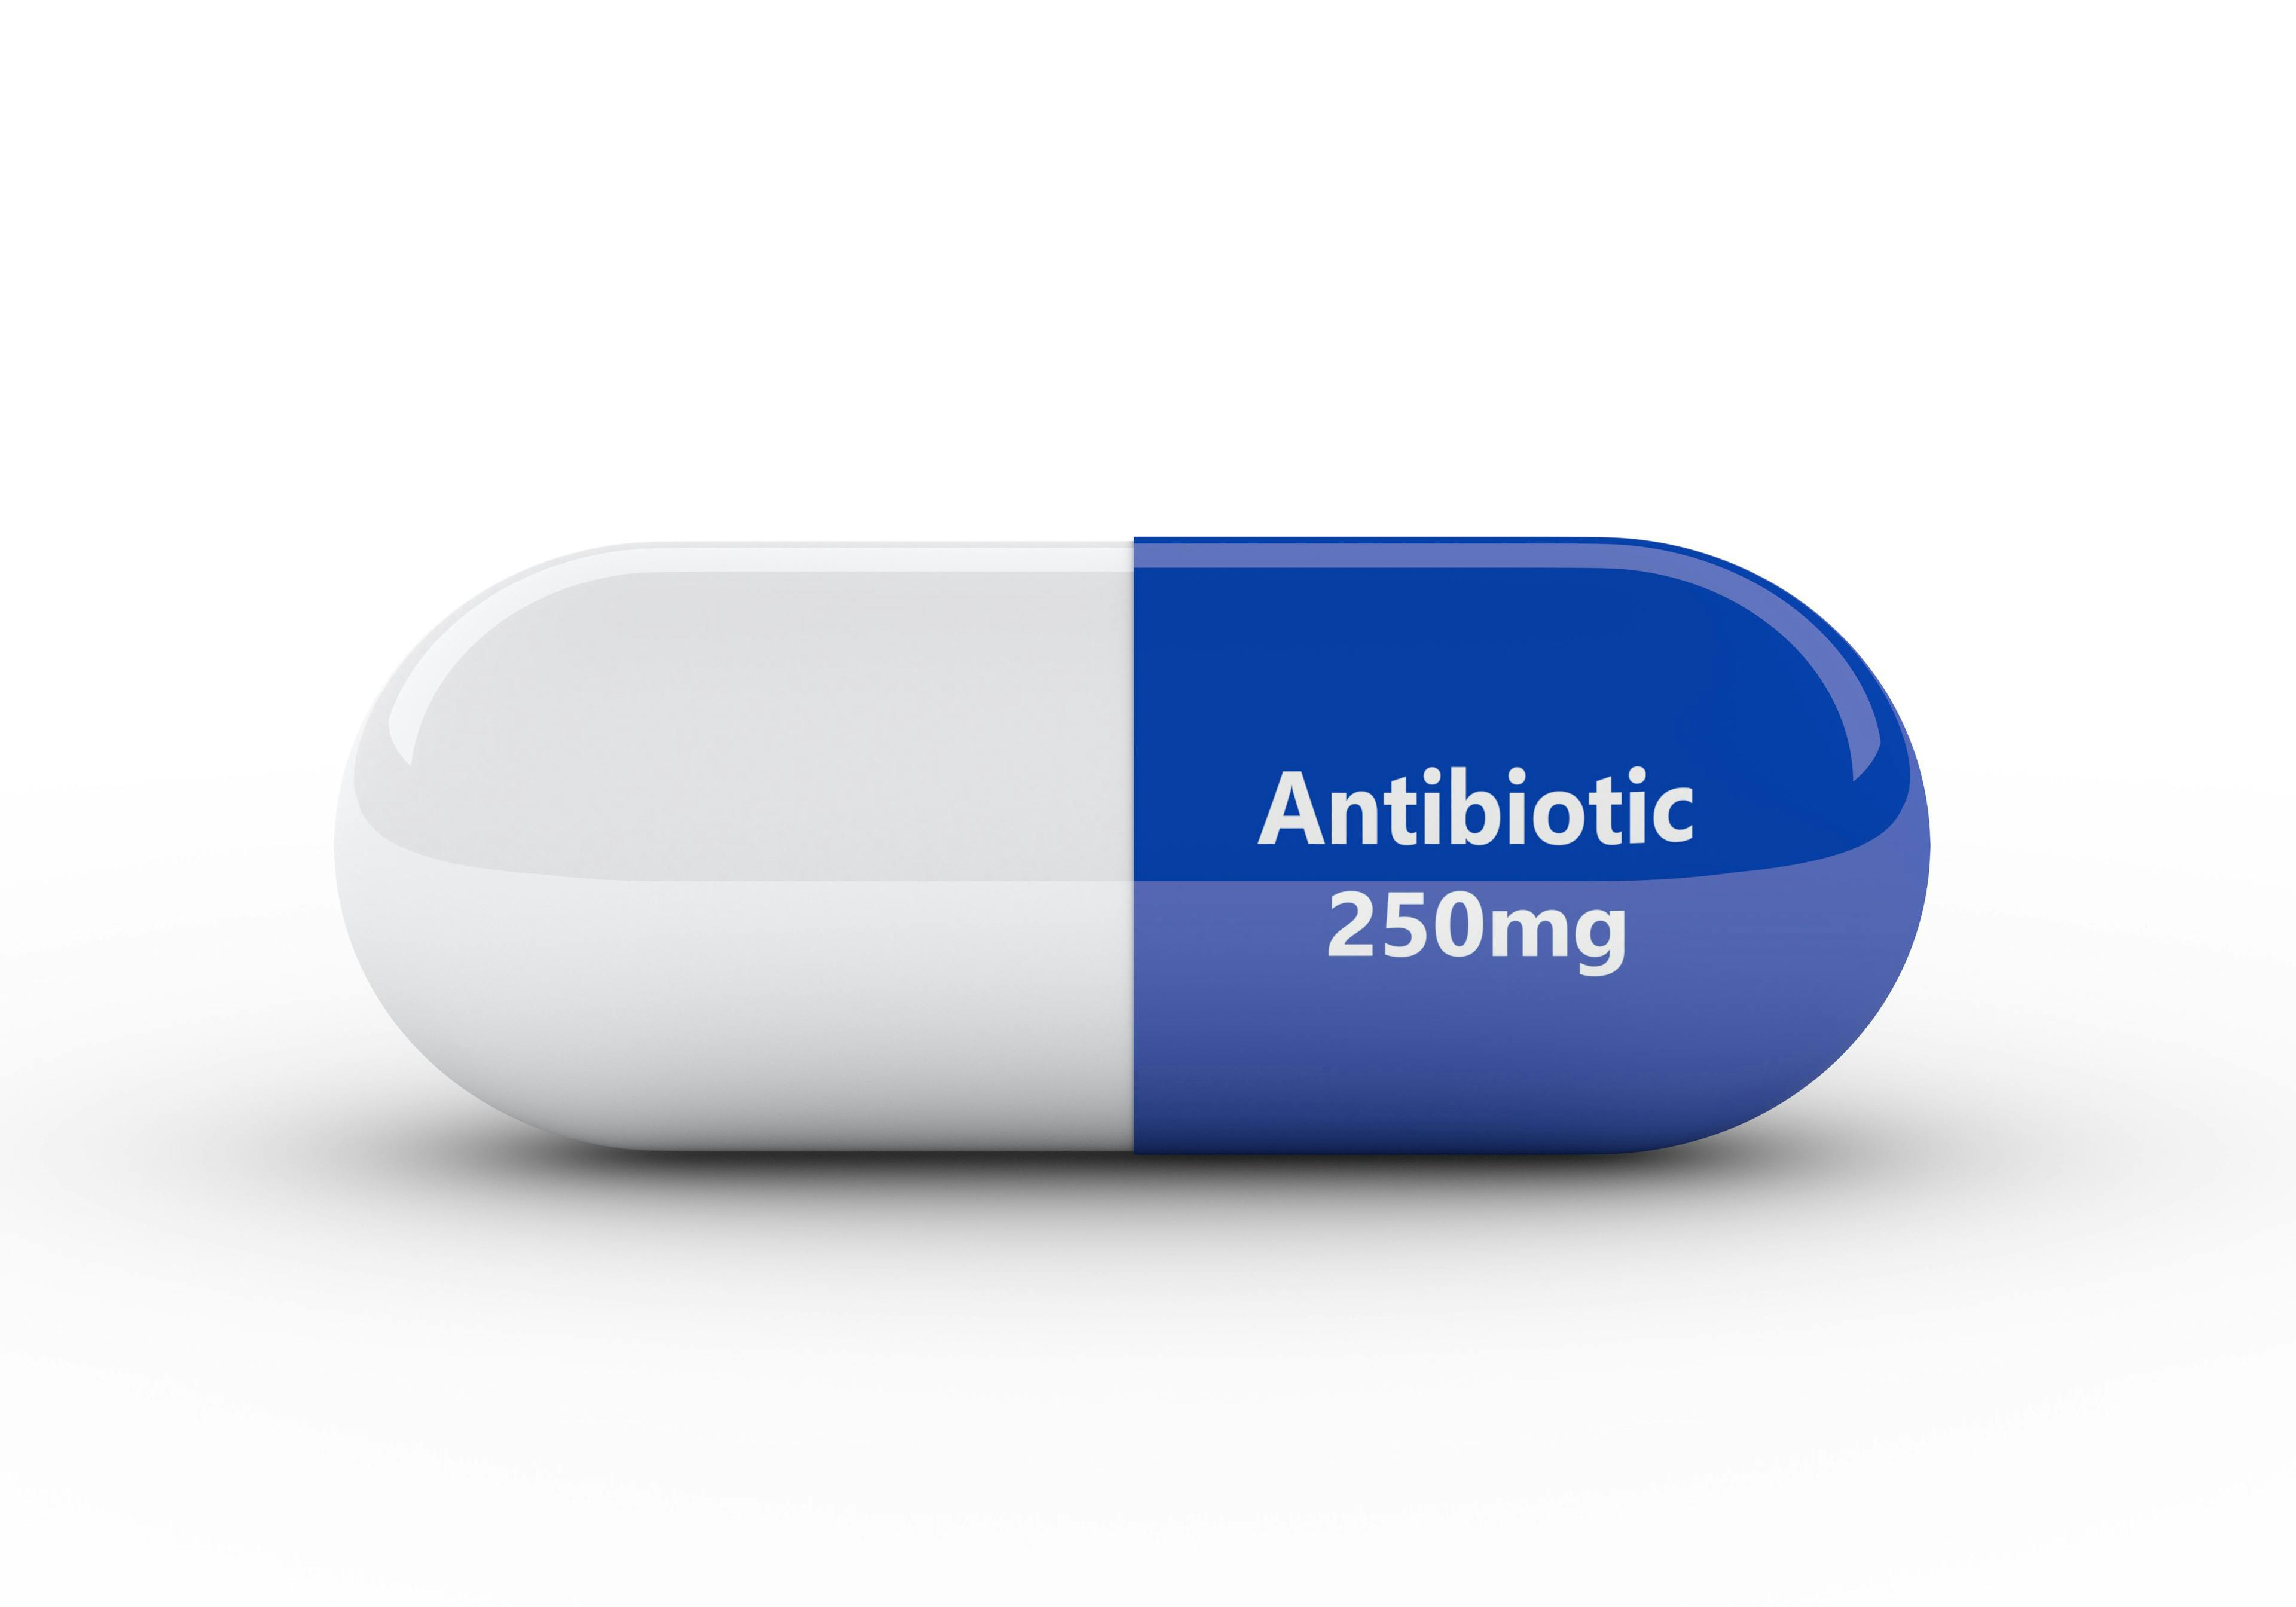 Exposure to antibiotics increases the risk of developing rheumatoid arthritis.